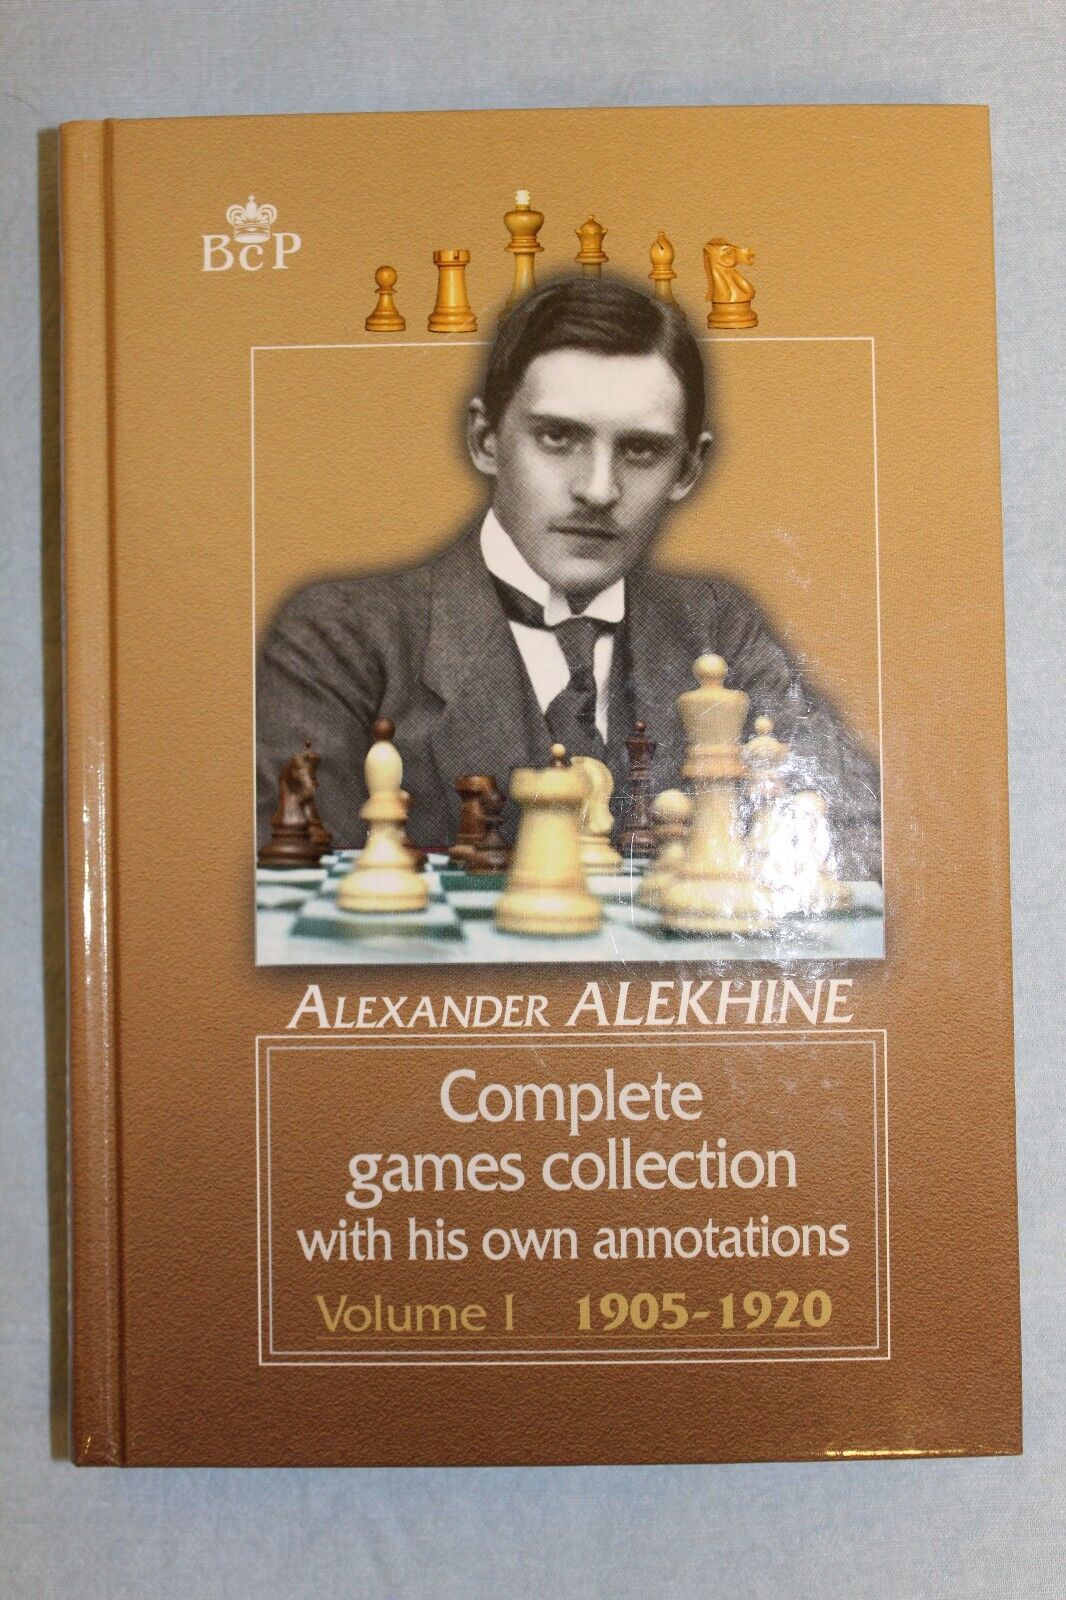 Alexander Alekhine - Becoming a Chess Master